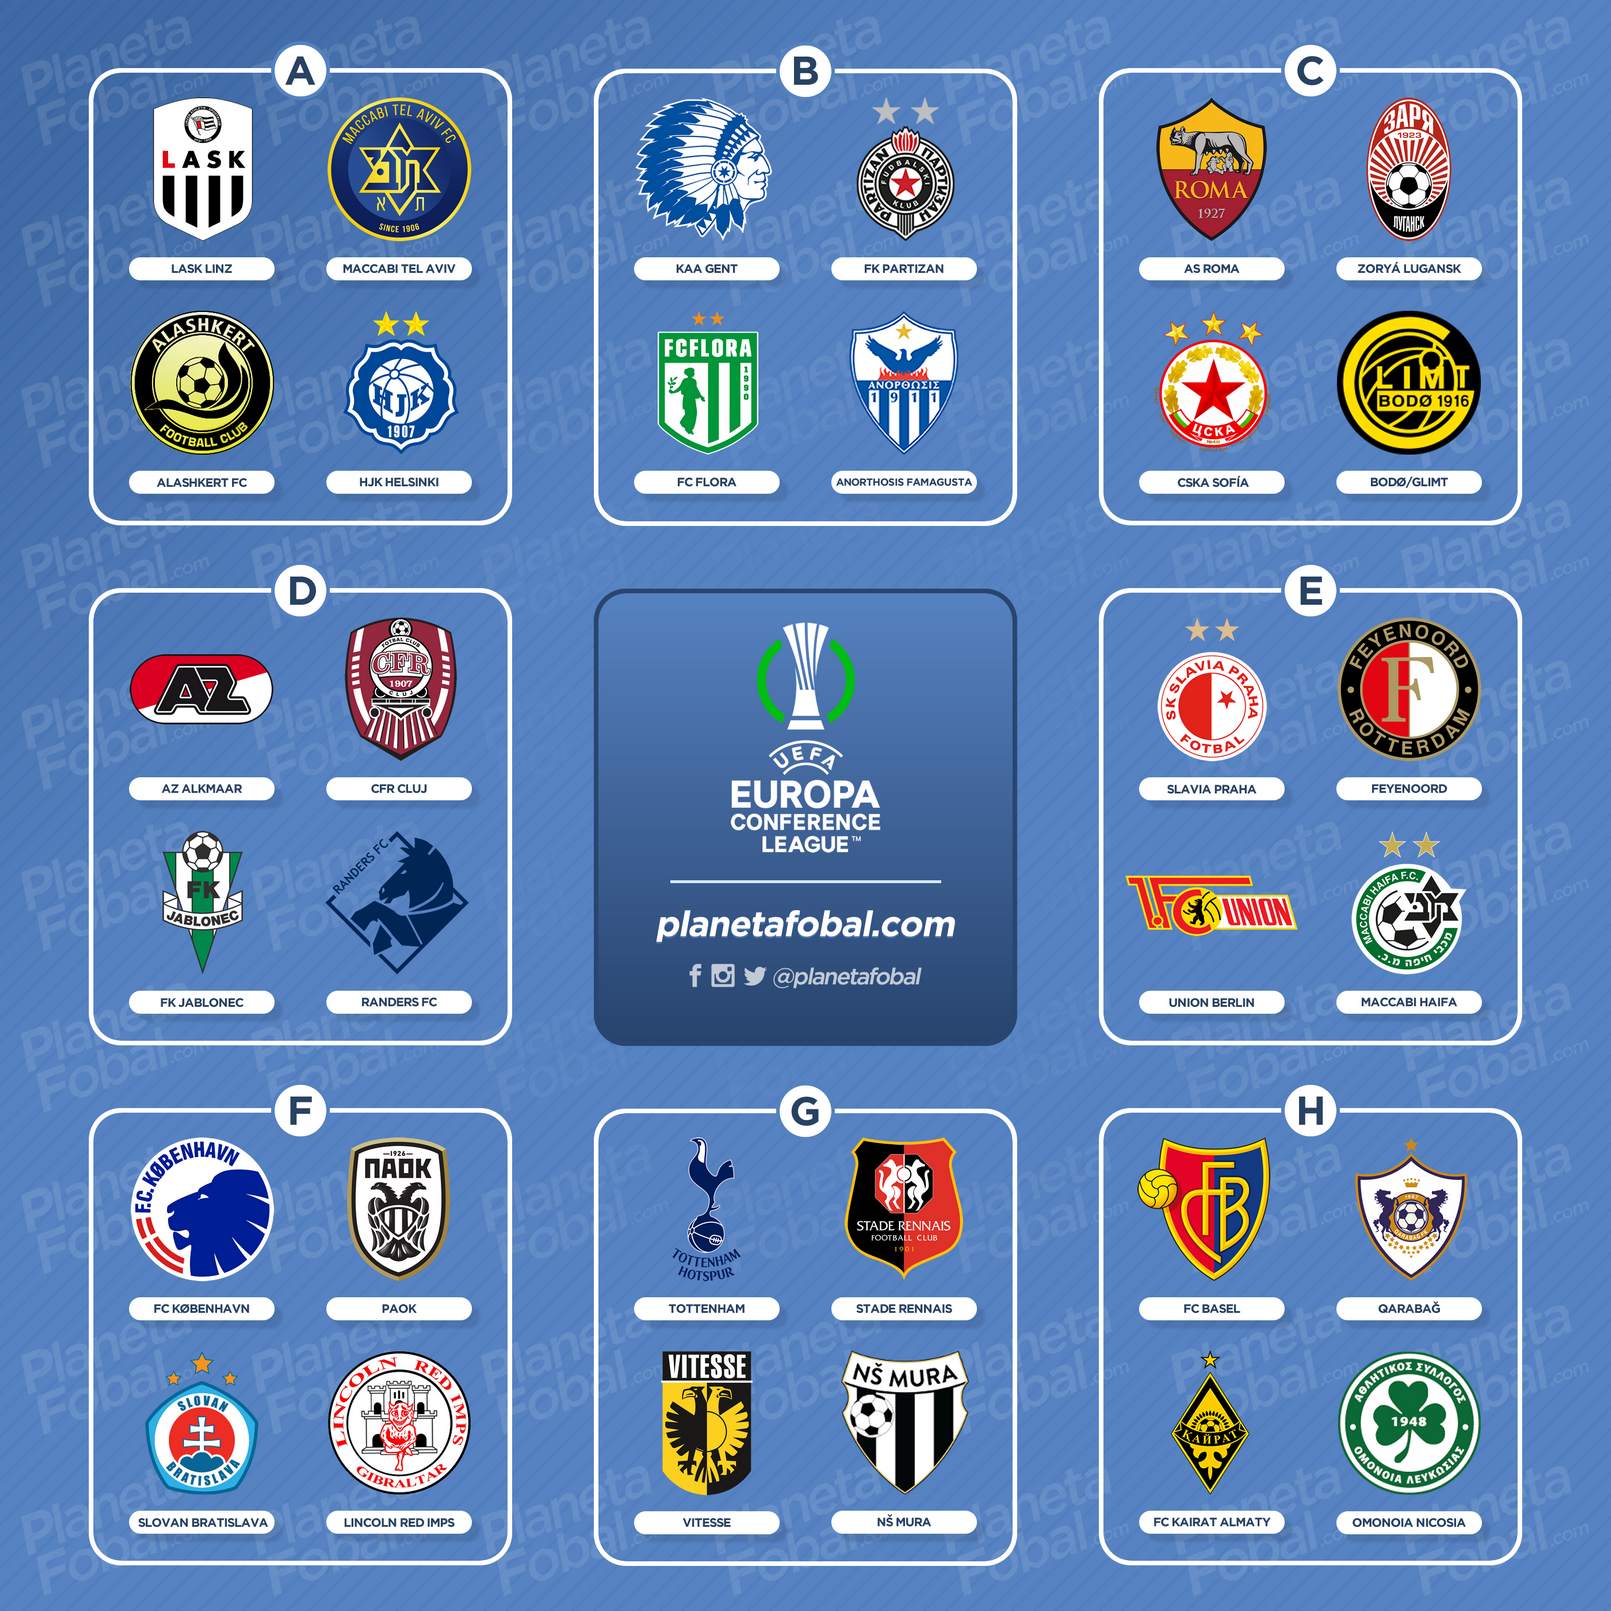 Grupos de la UEFA Europa Conference League 2021/22